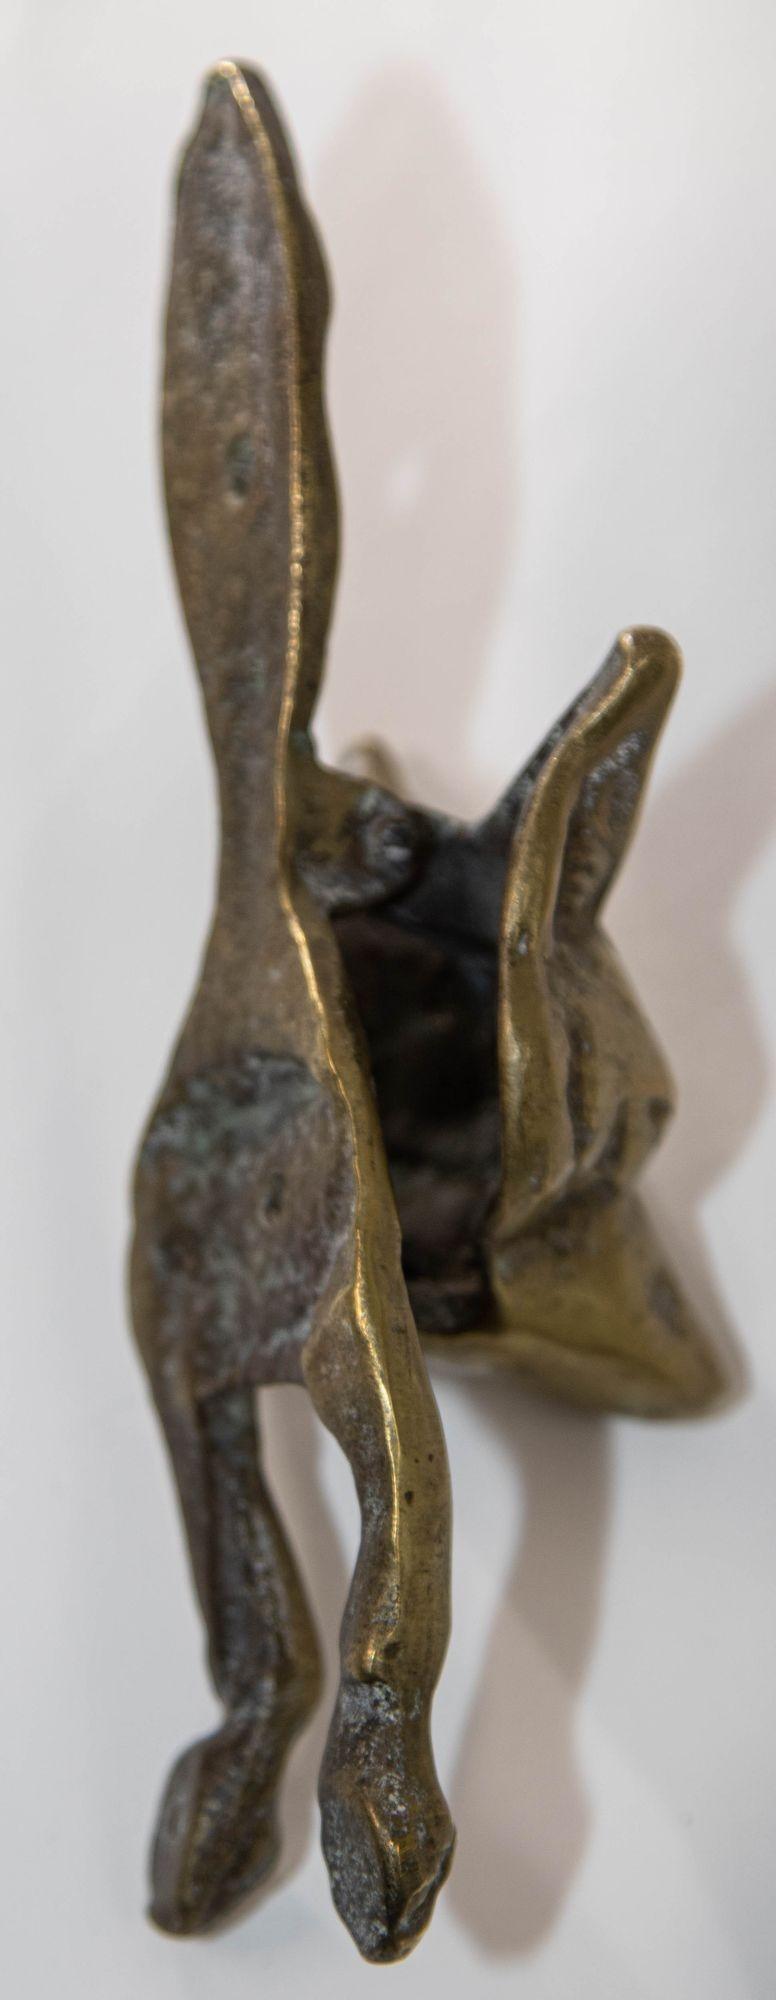 Vintage English cast brass fox door knocker circa 1940s.
A Victorian English solid cast brass fox door knocker. 
The vintage English cast brass fox door knocker is a charming and distinctive decorative element for a front door.
A brass door